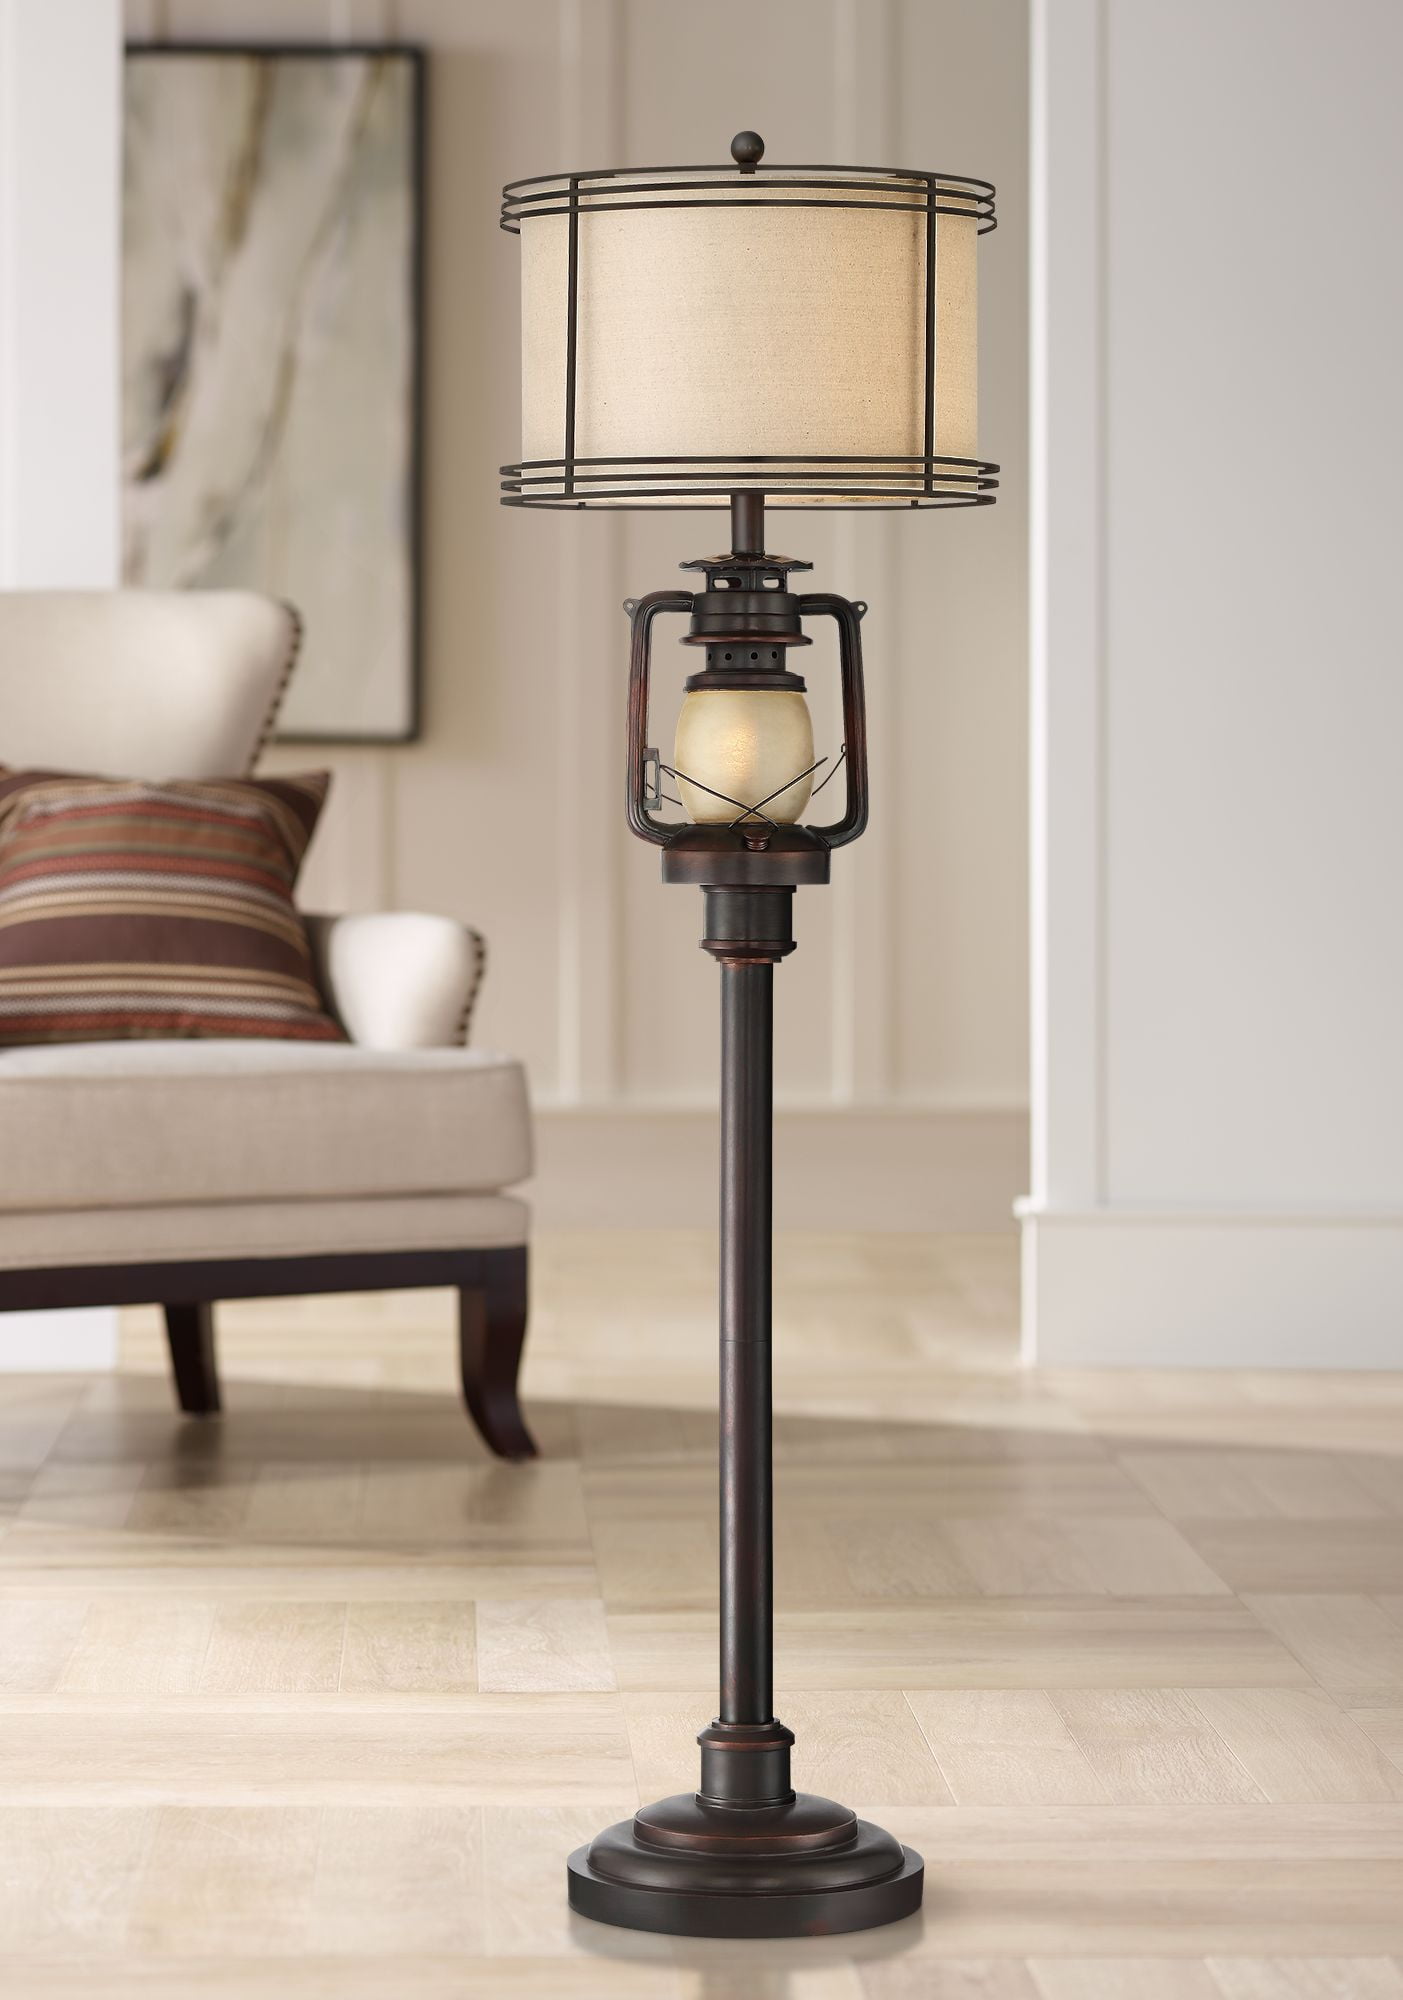 Barnes and Ivy Rustic Industrial Floor Lamp with Nightlight Glass